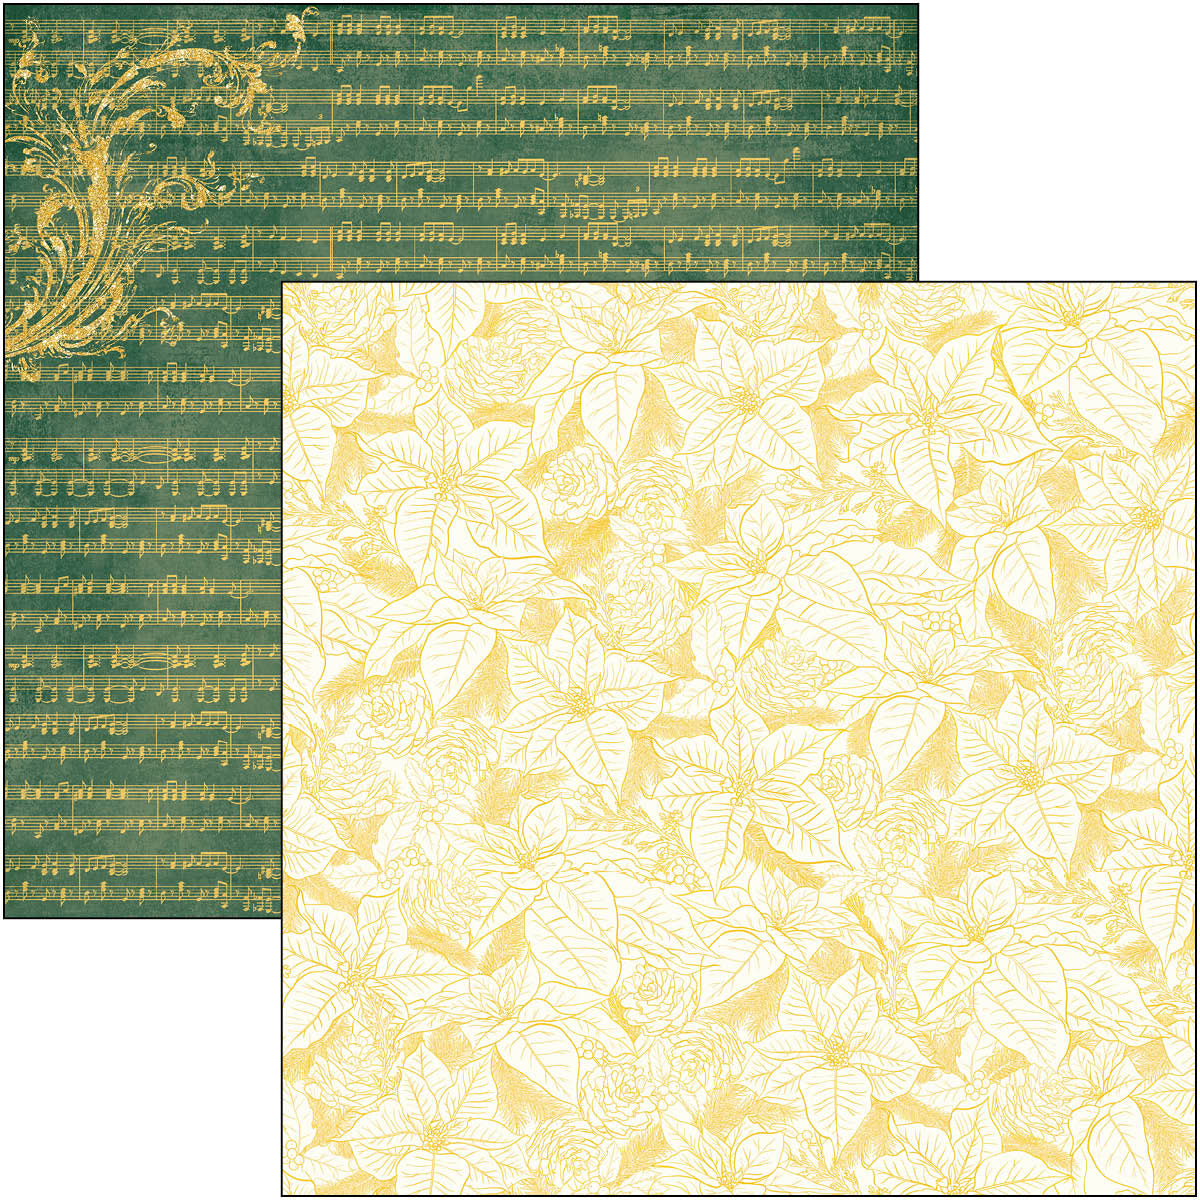 Black & Gold Foil Floral Scrapbook Paper - 12 x 12